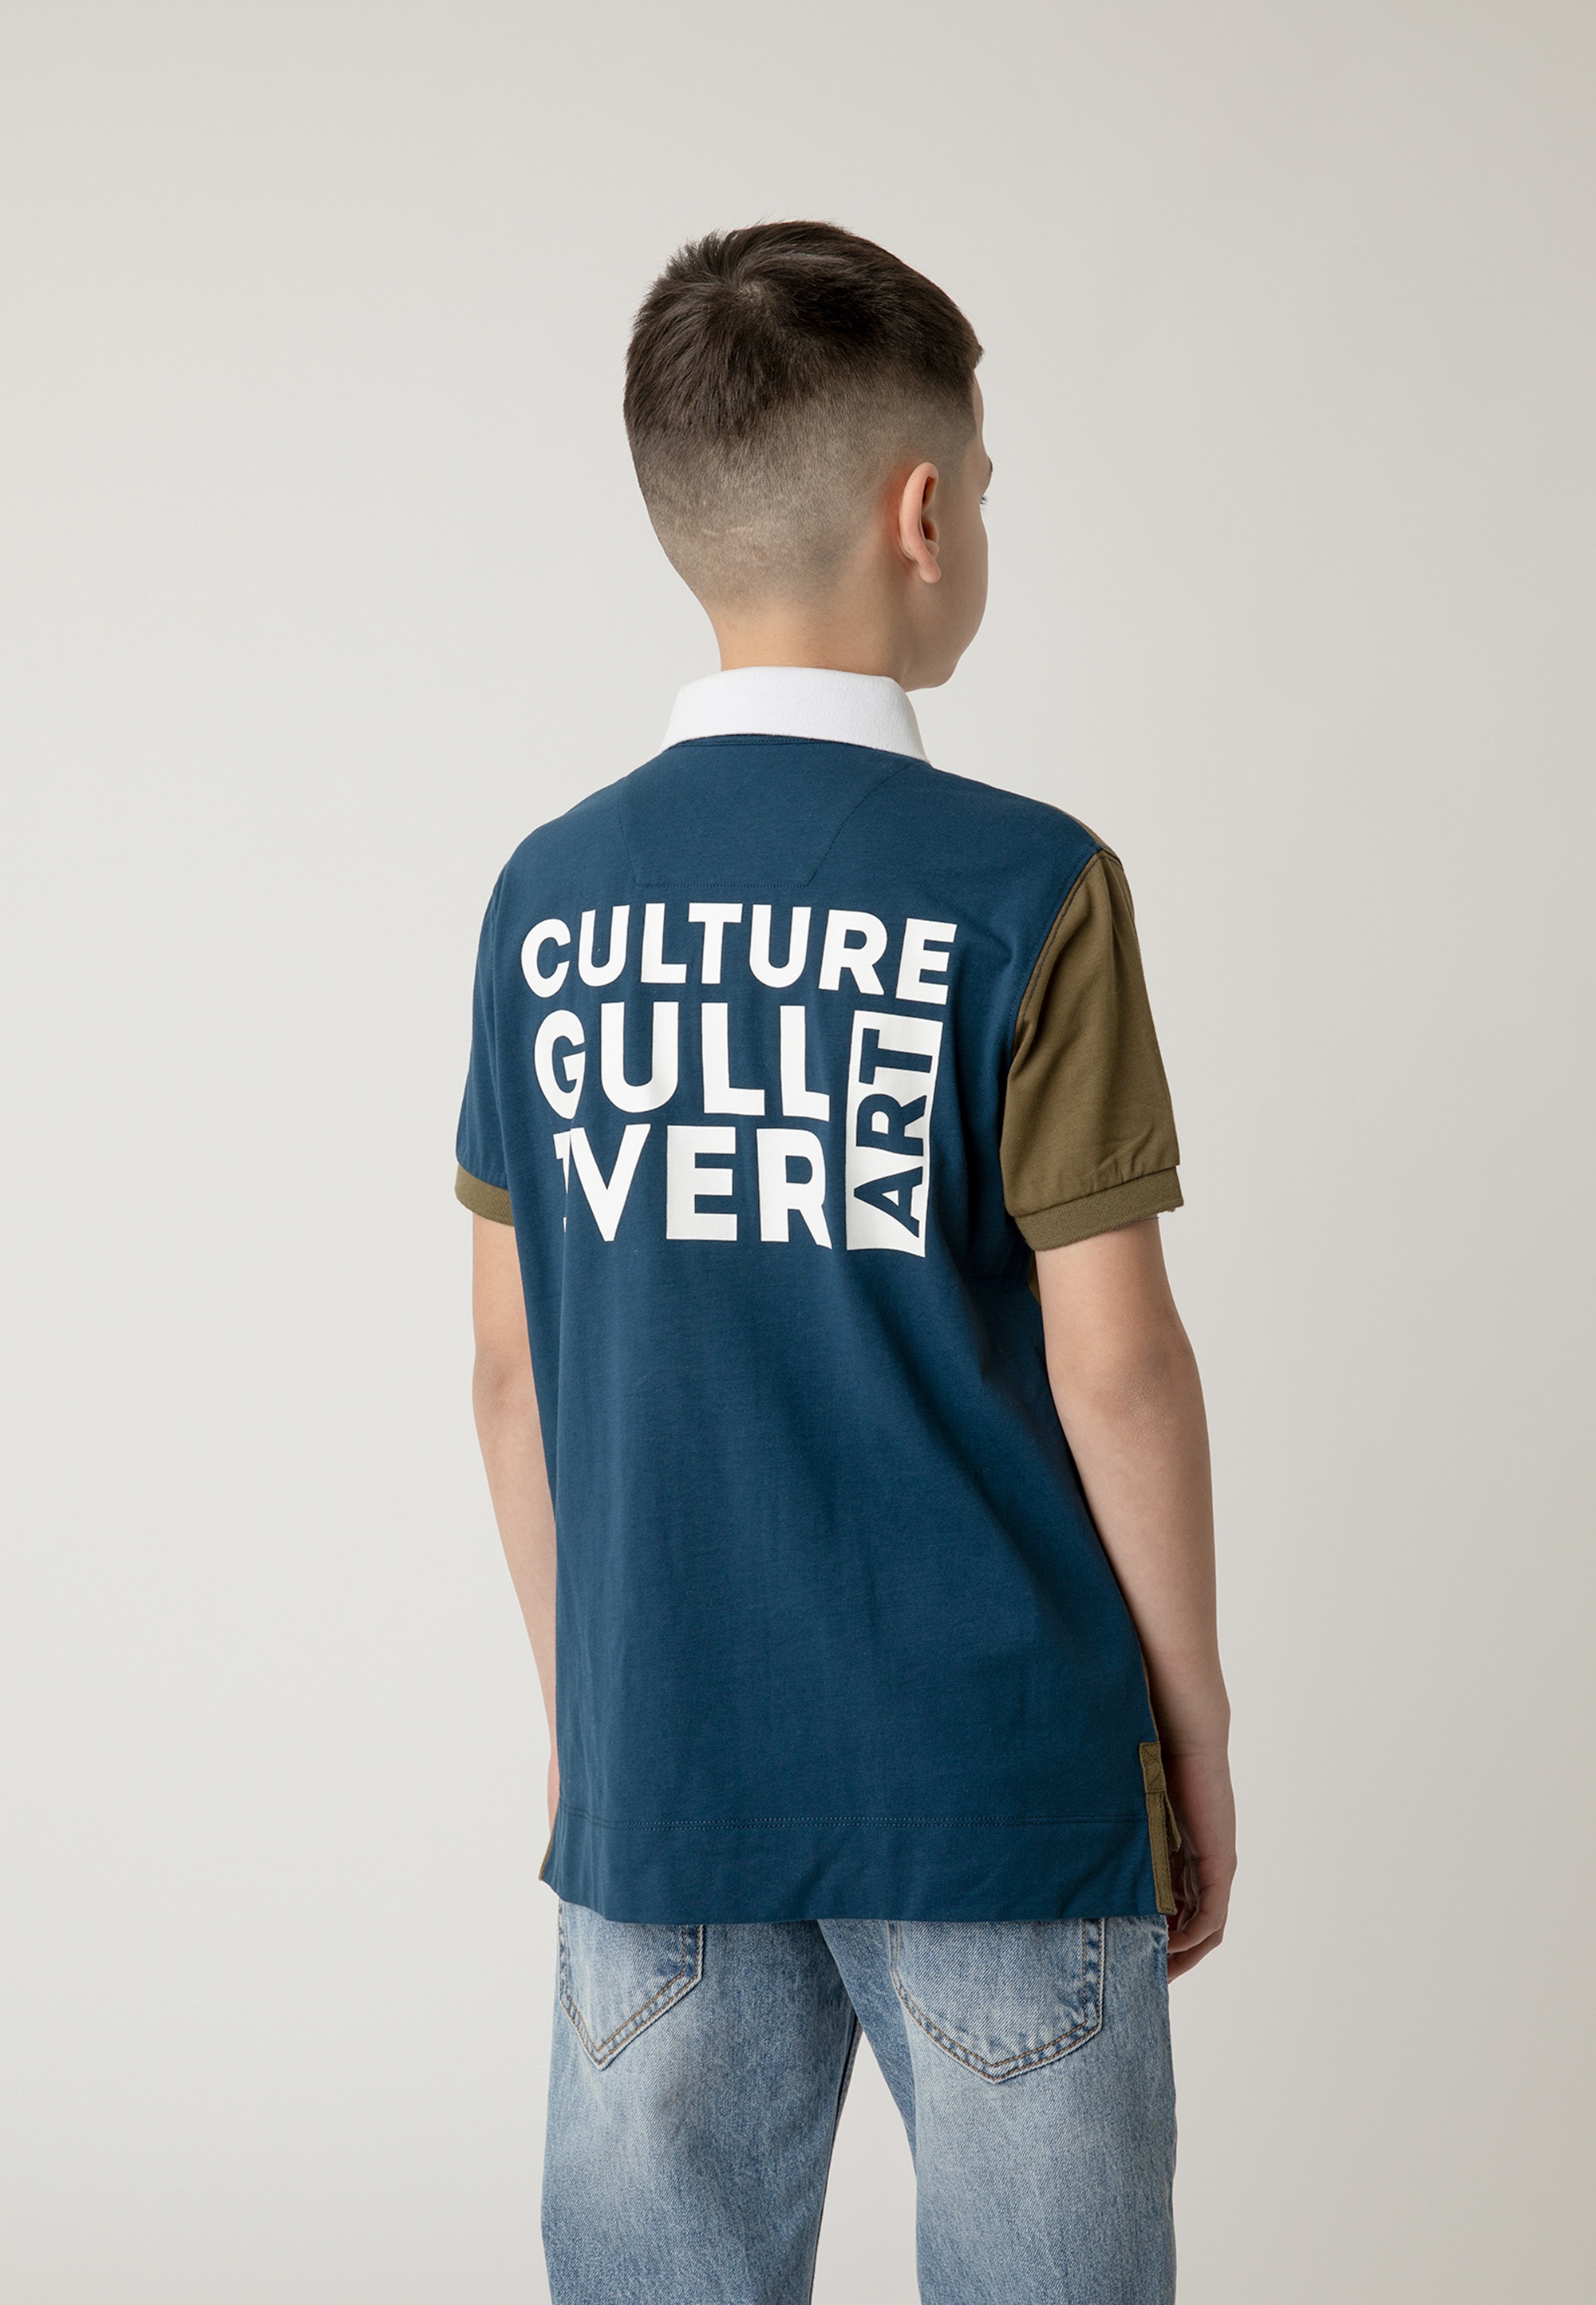 Gulliver Poloshirt mit trendigem Color-Blocking-Print | Poloshirts